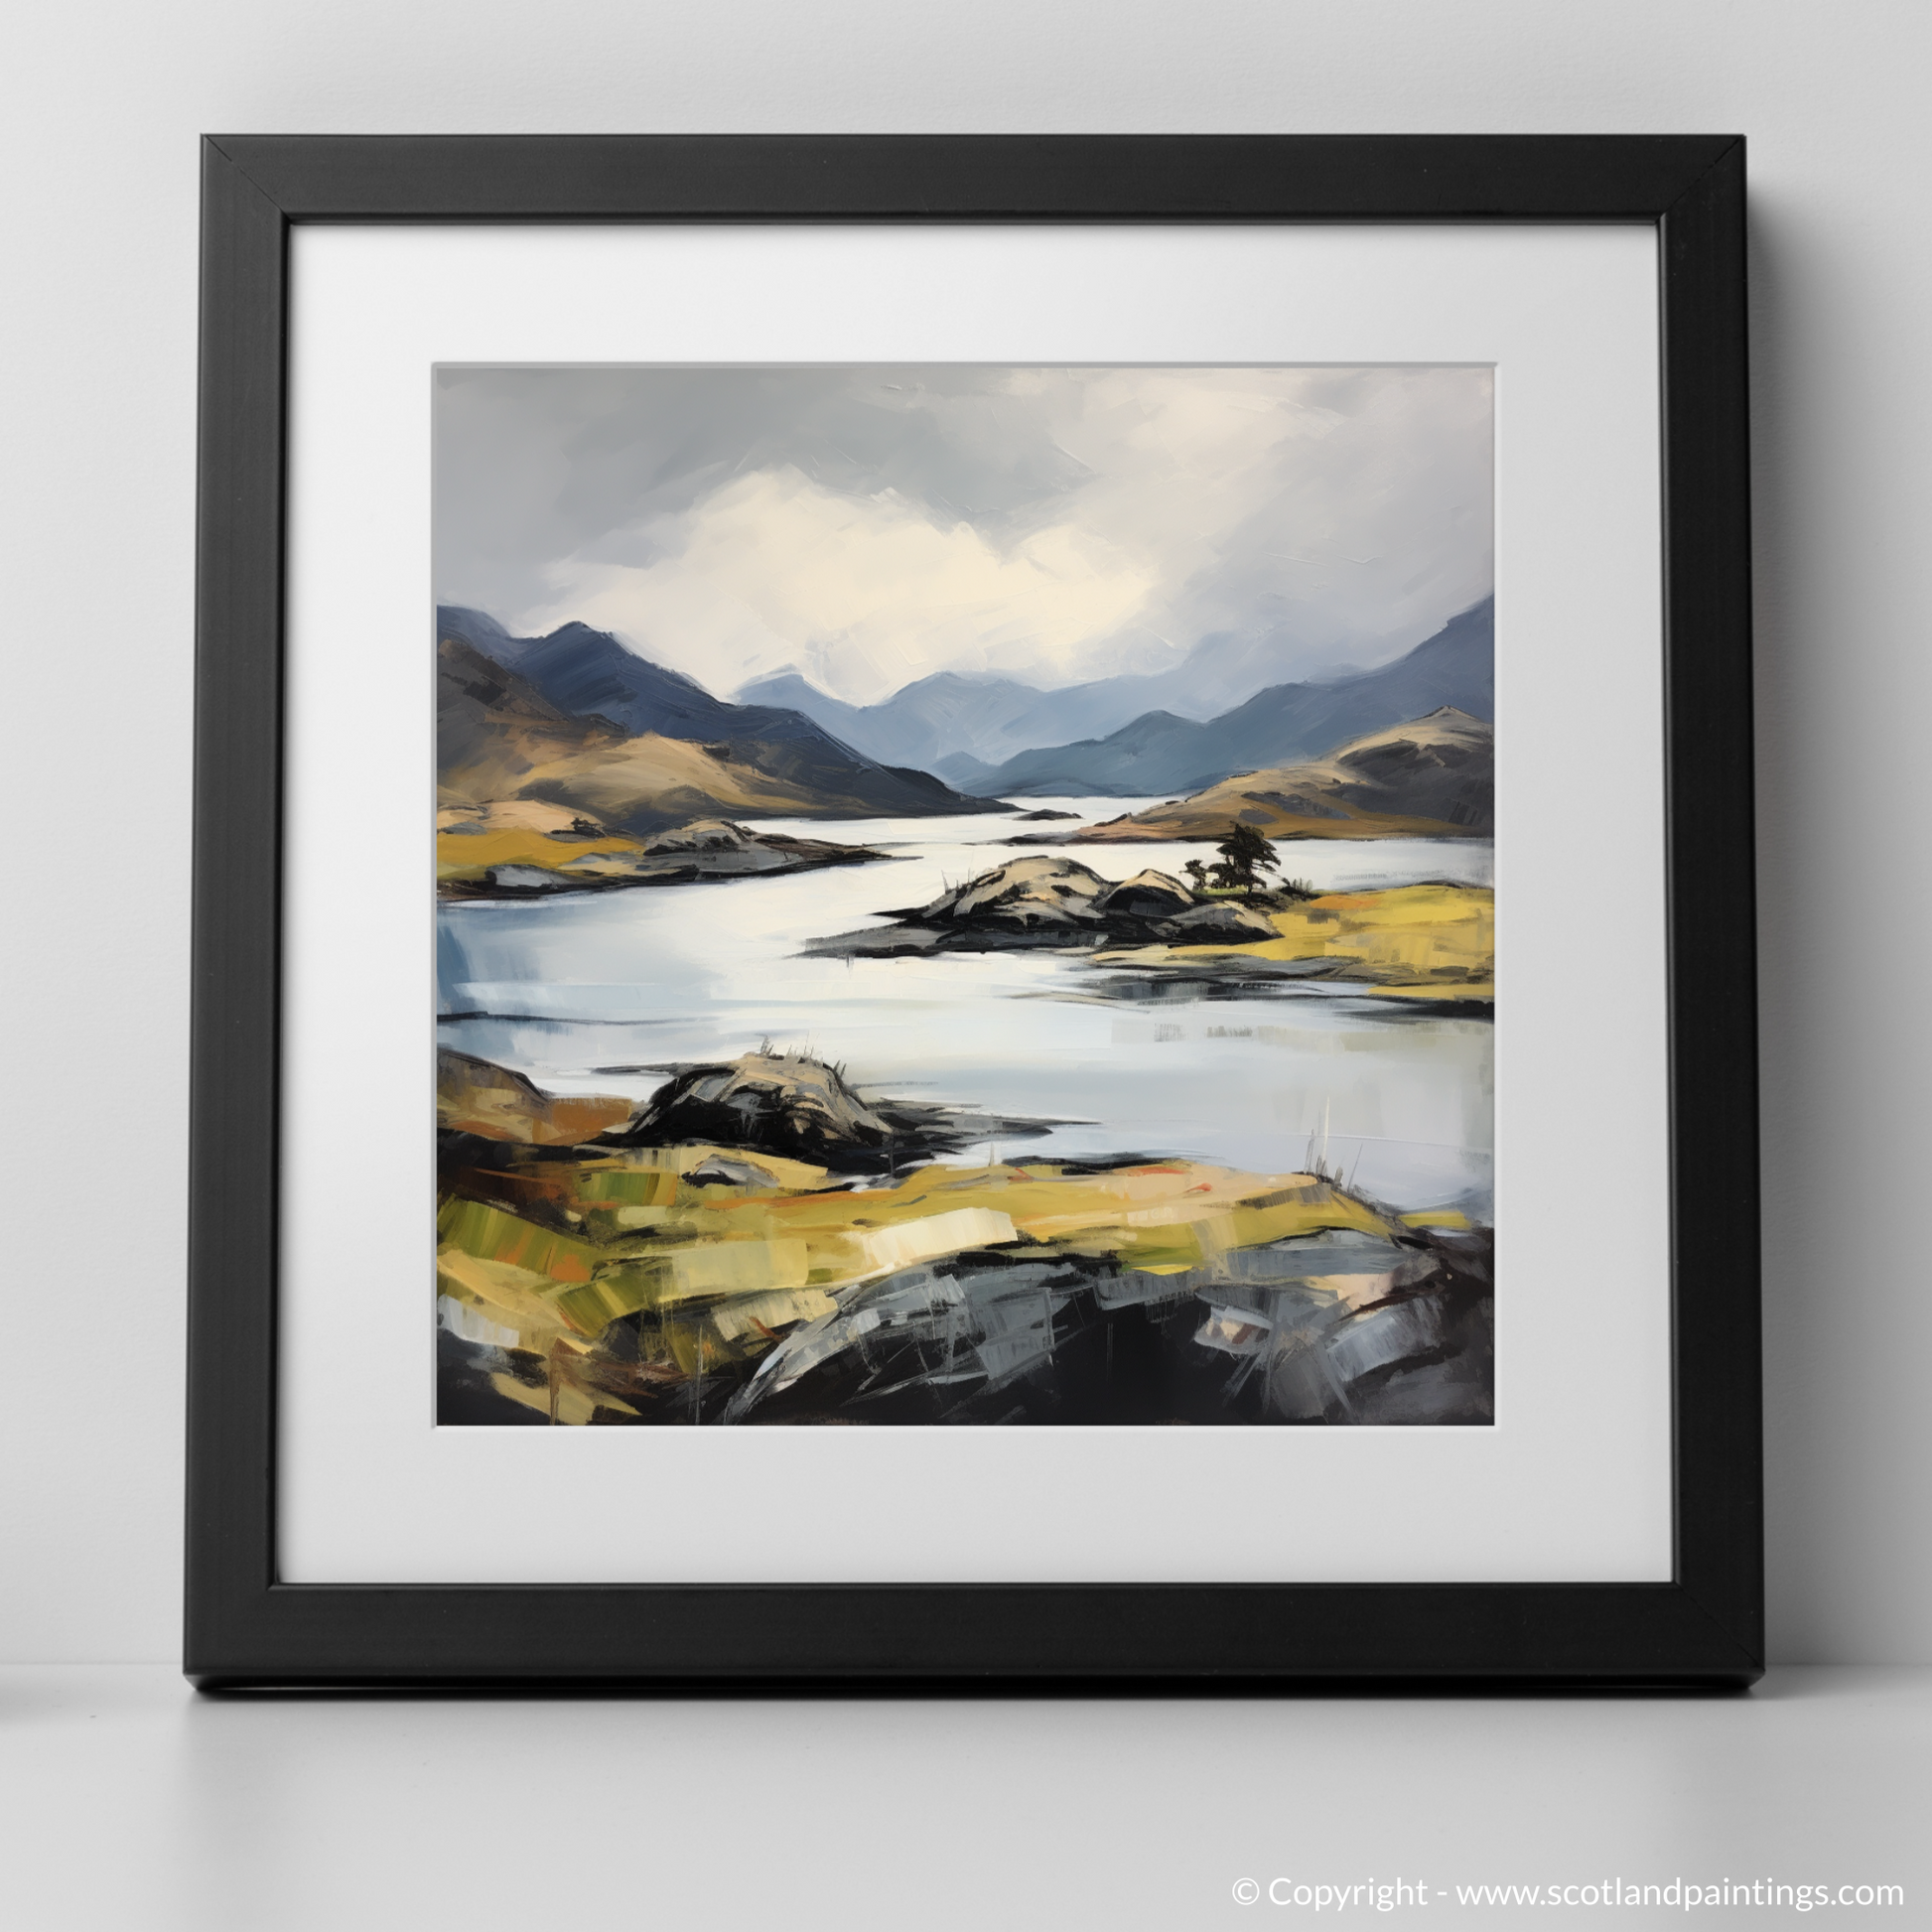 Art Print of Loch Morar, Highlands with a black frame